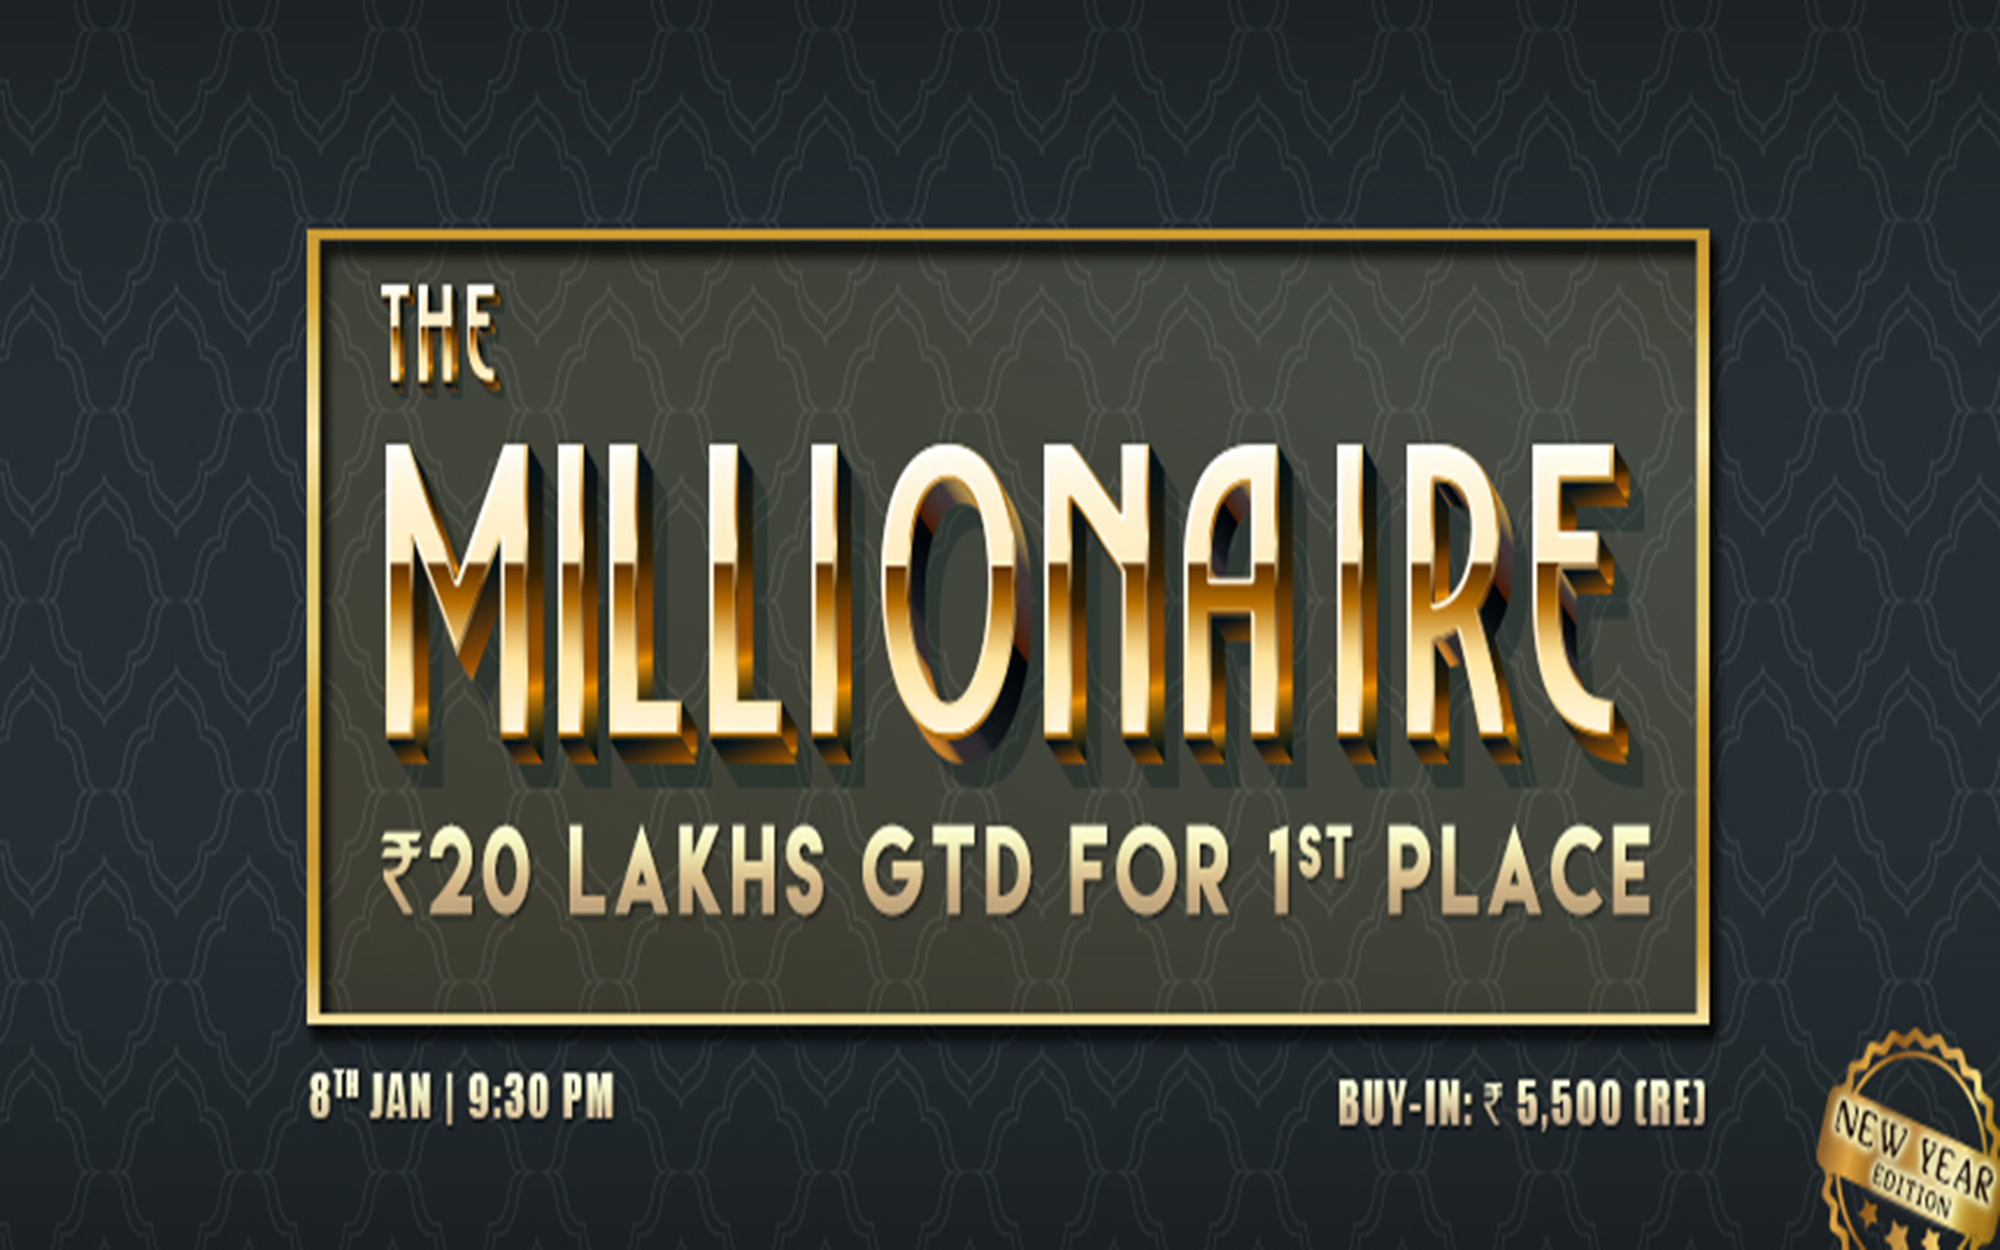 the Millionaire